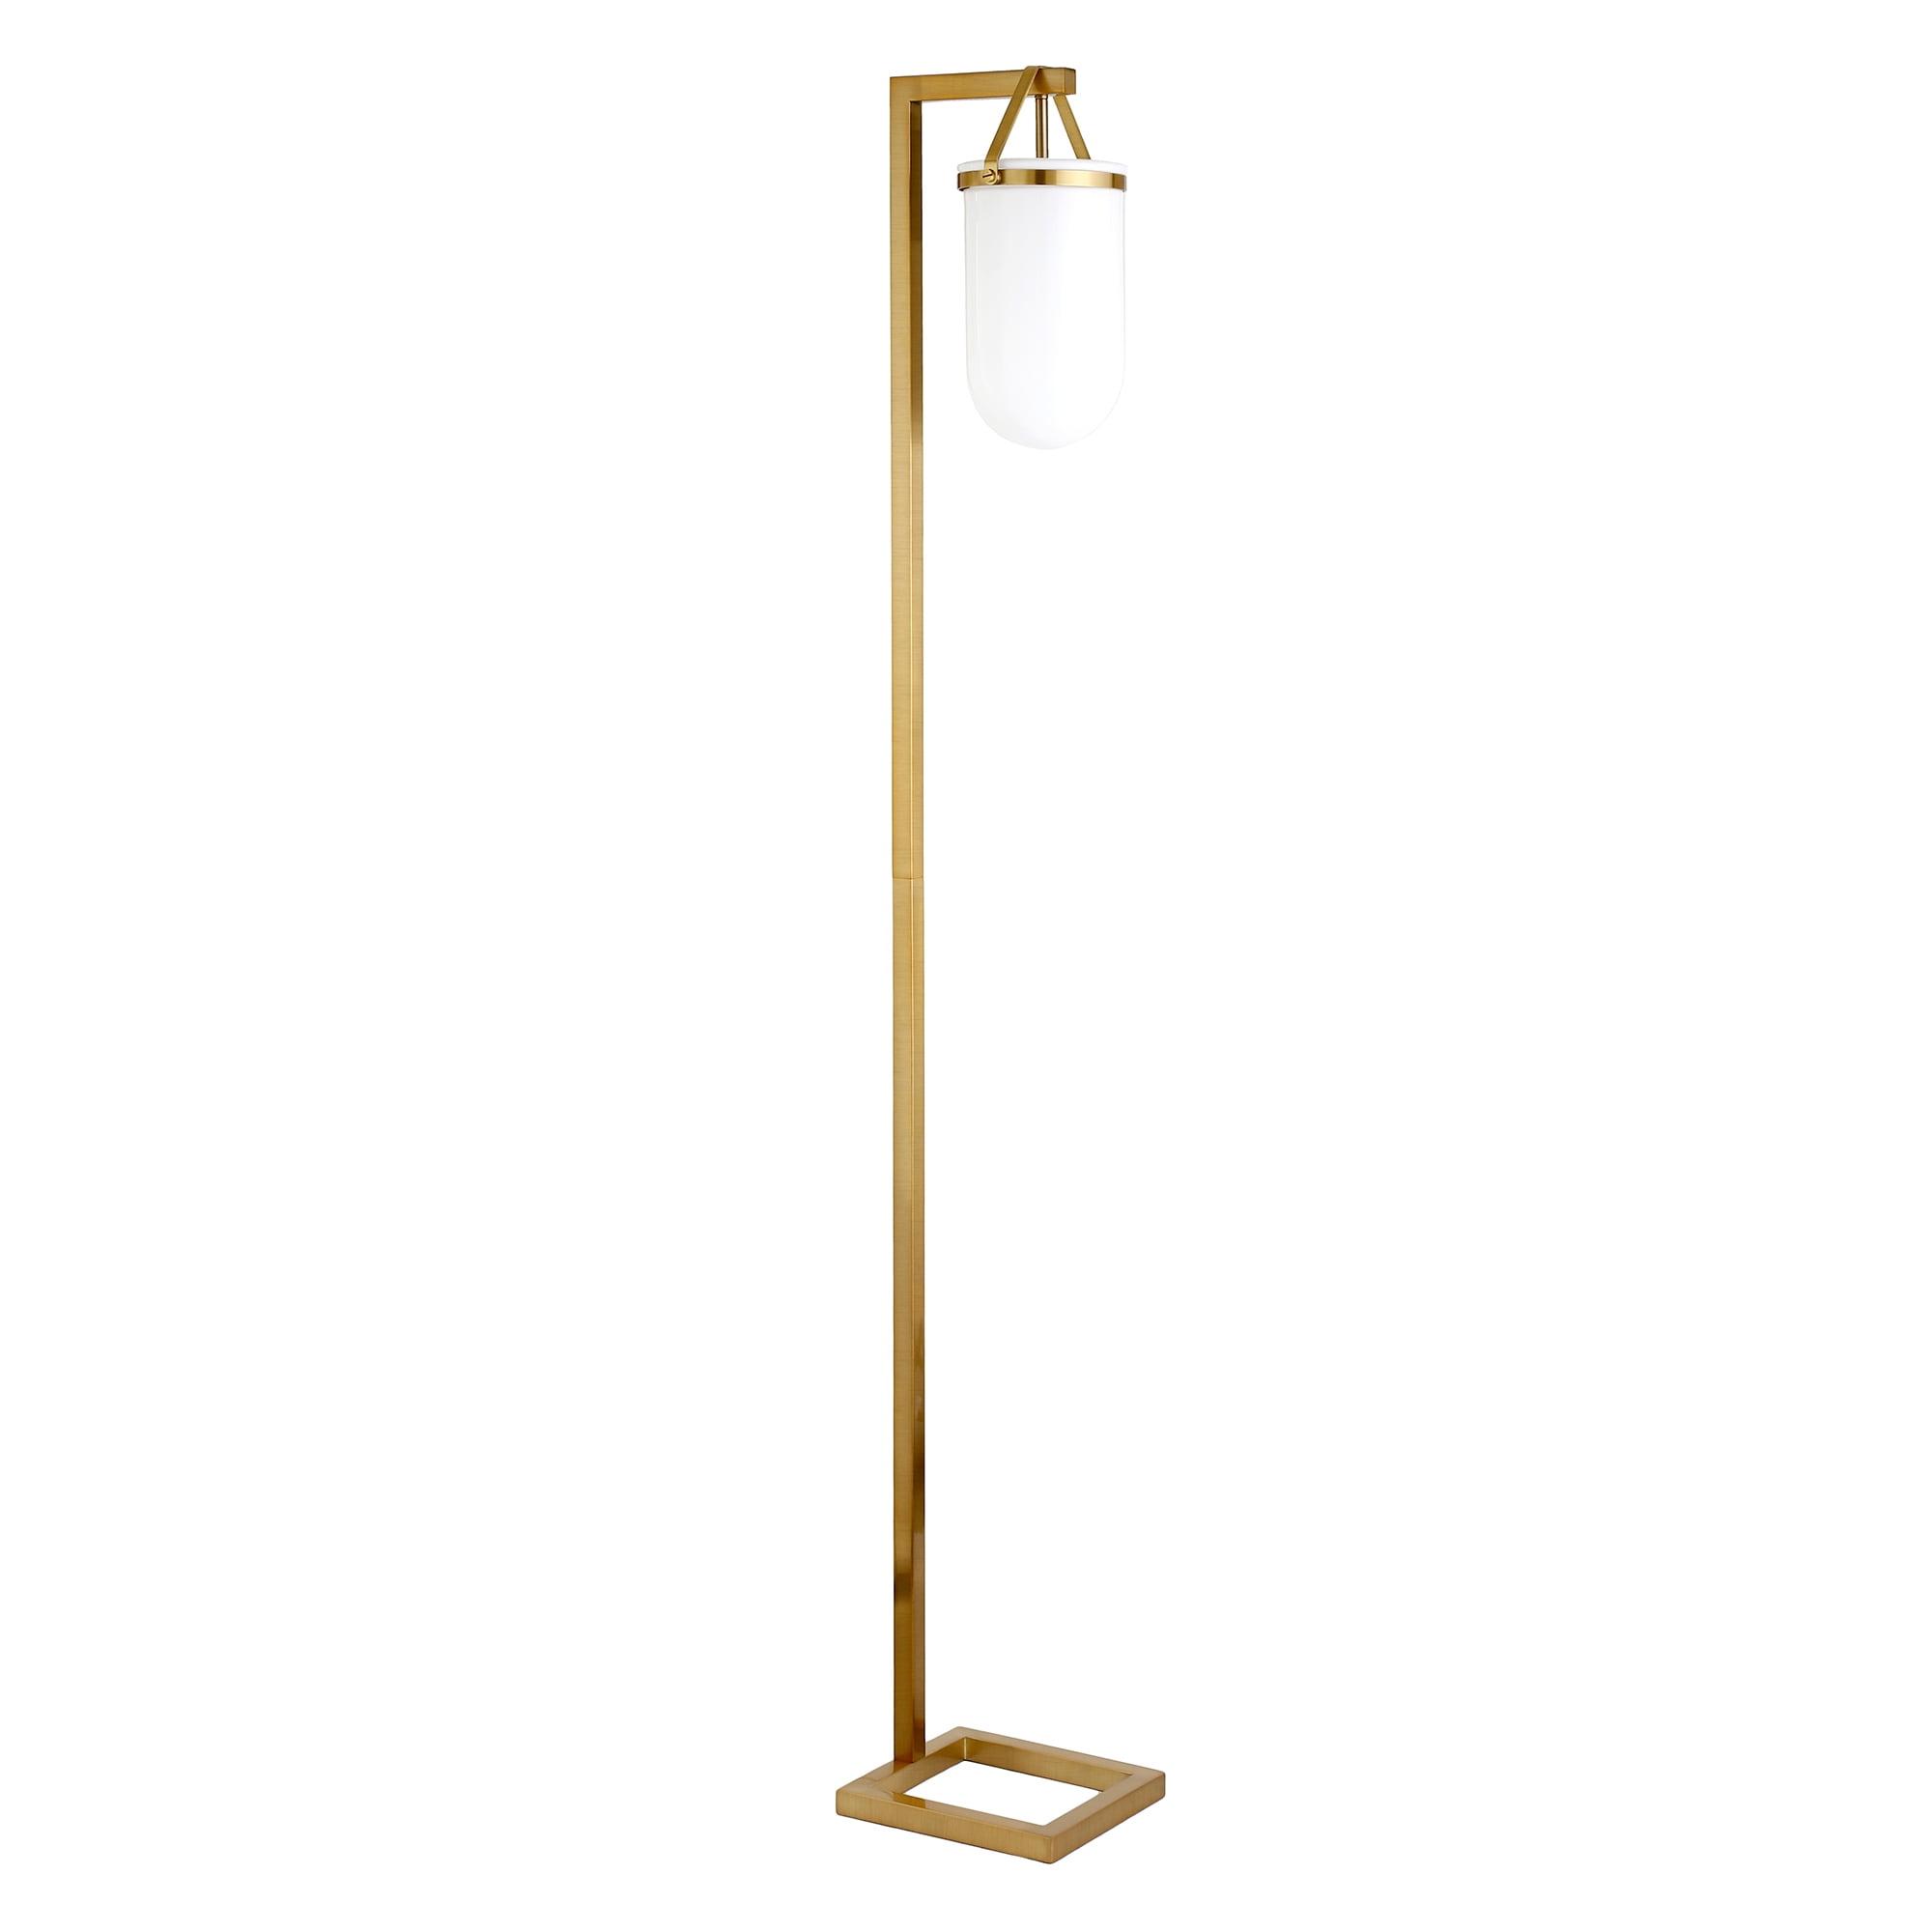 Angular Brass Floor Lamp with White Milk Glass Shade - 68" Tall